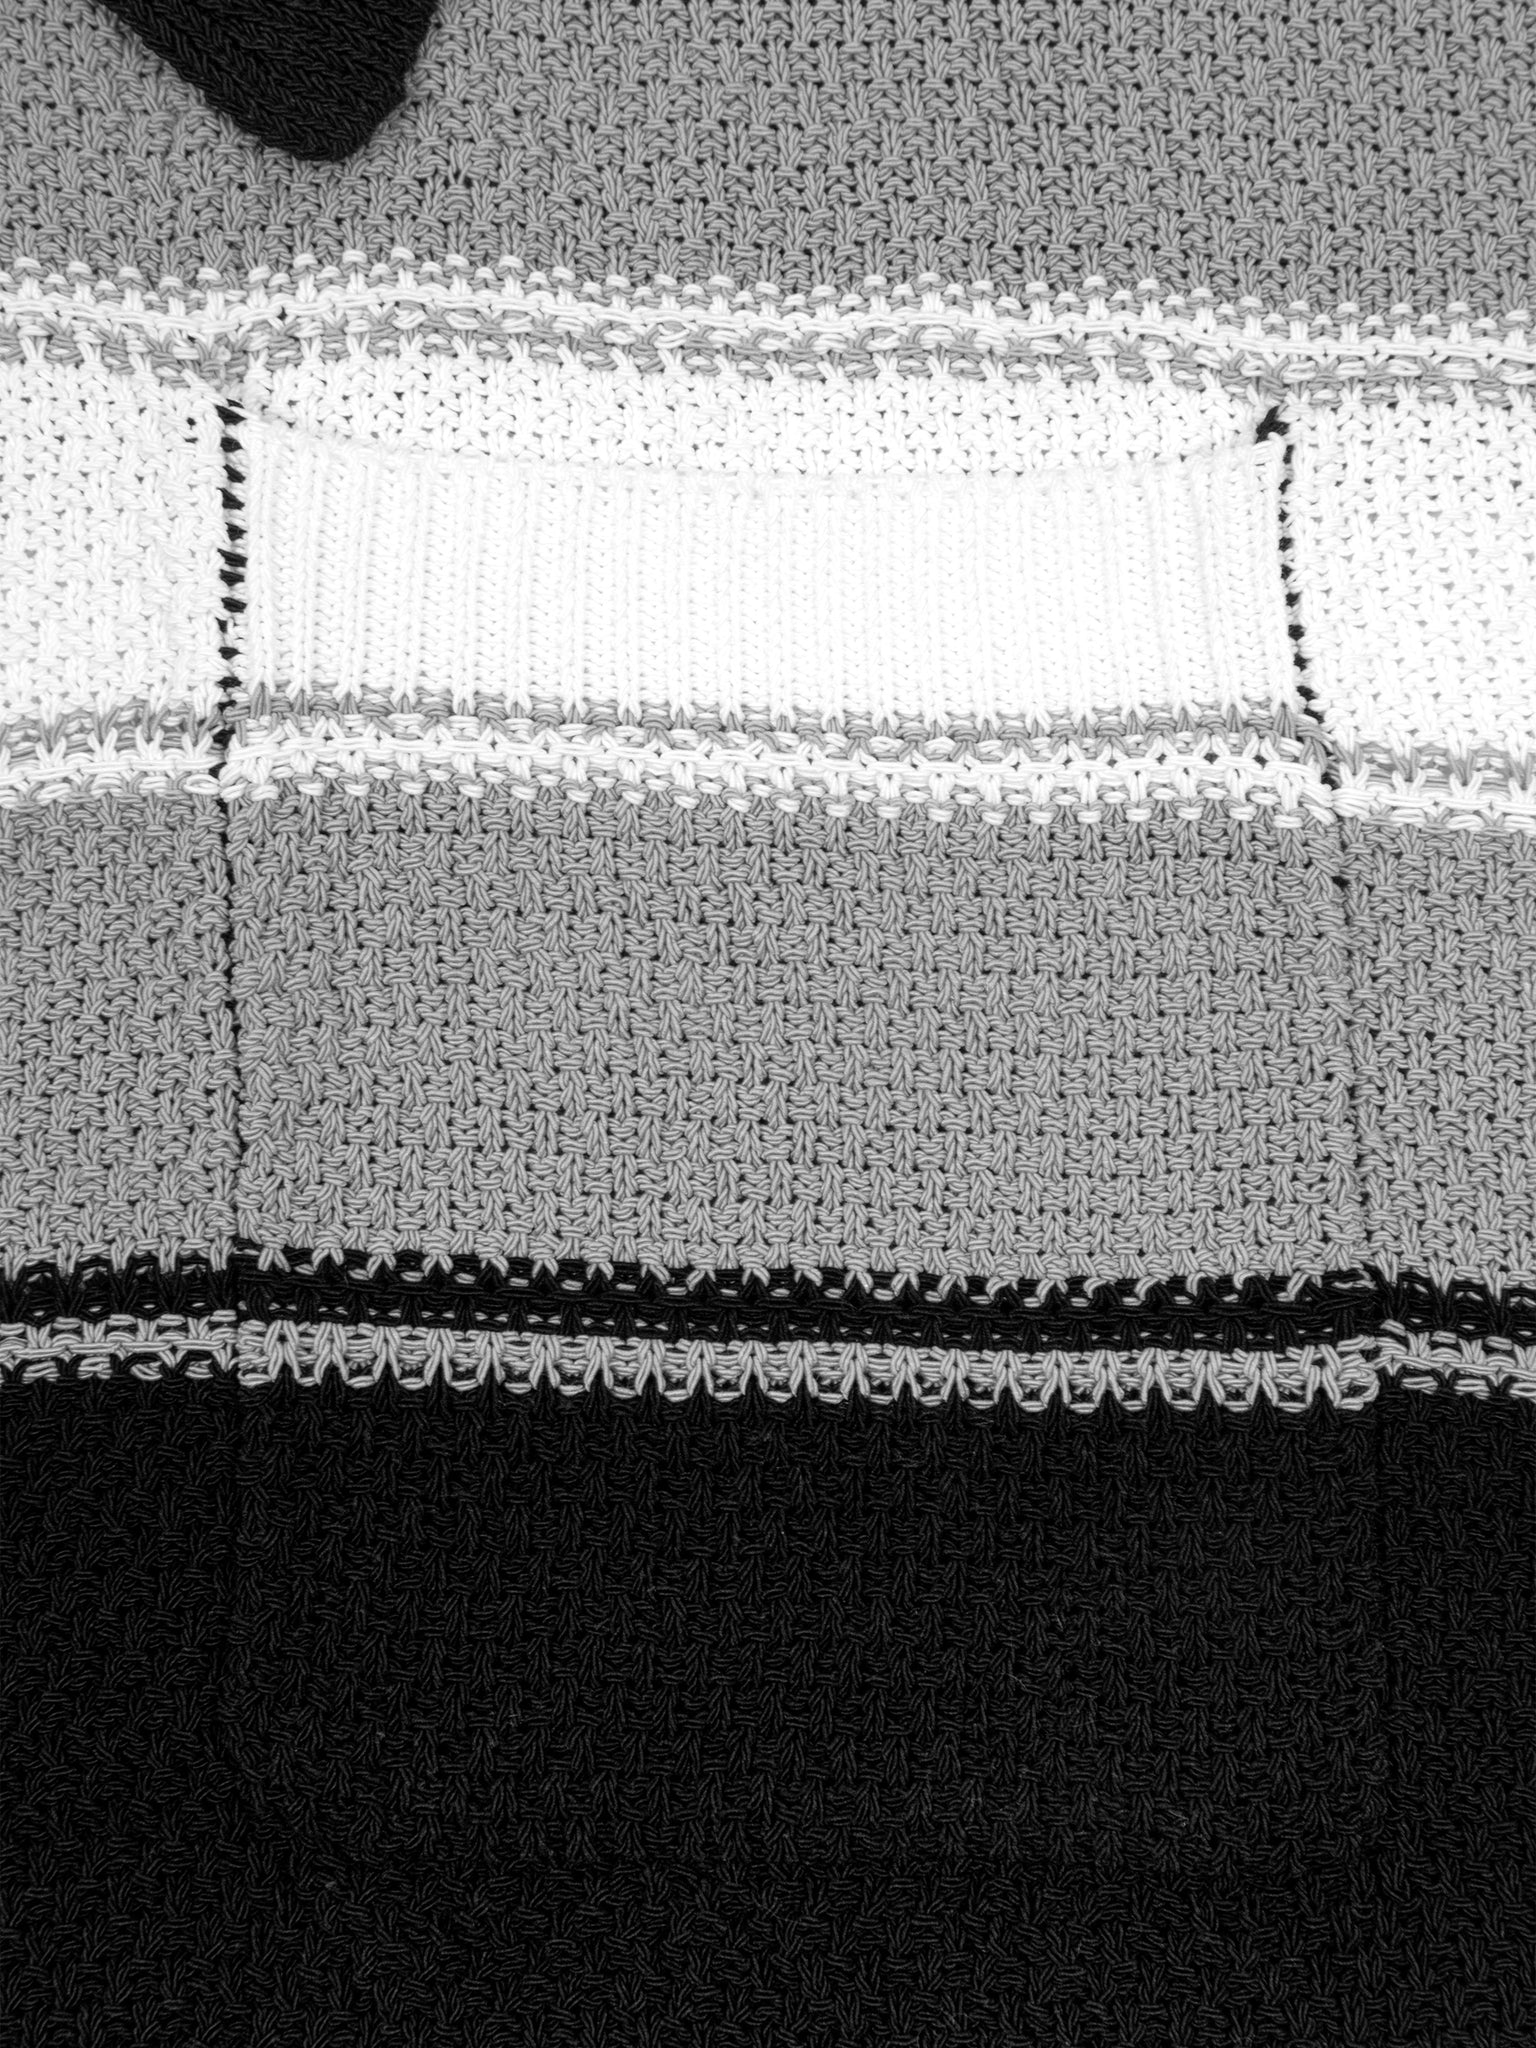 007 - Balcony Knit Shirt - C2H4®